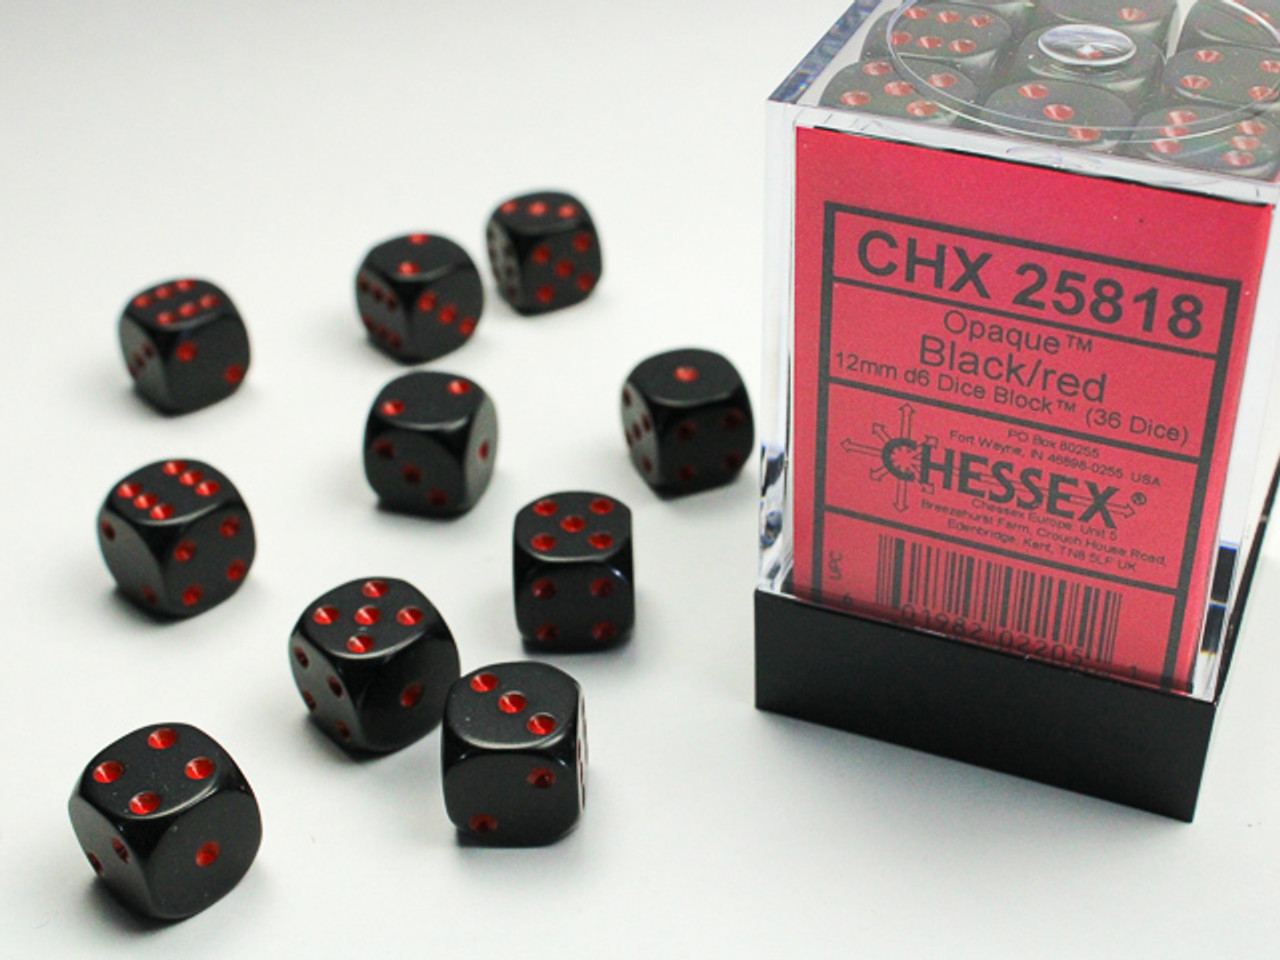 25818 - Opaque 12mm d6 Black/red Dice Block™ (36 dice)